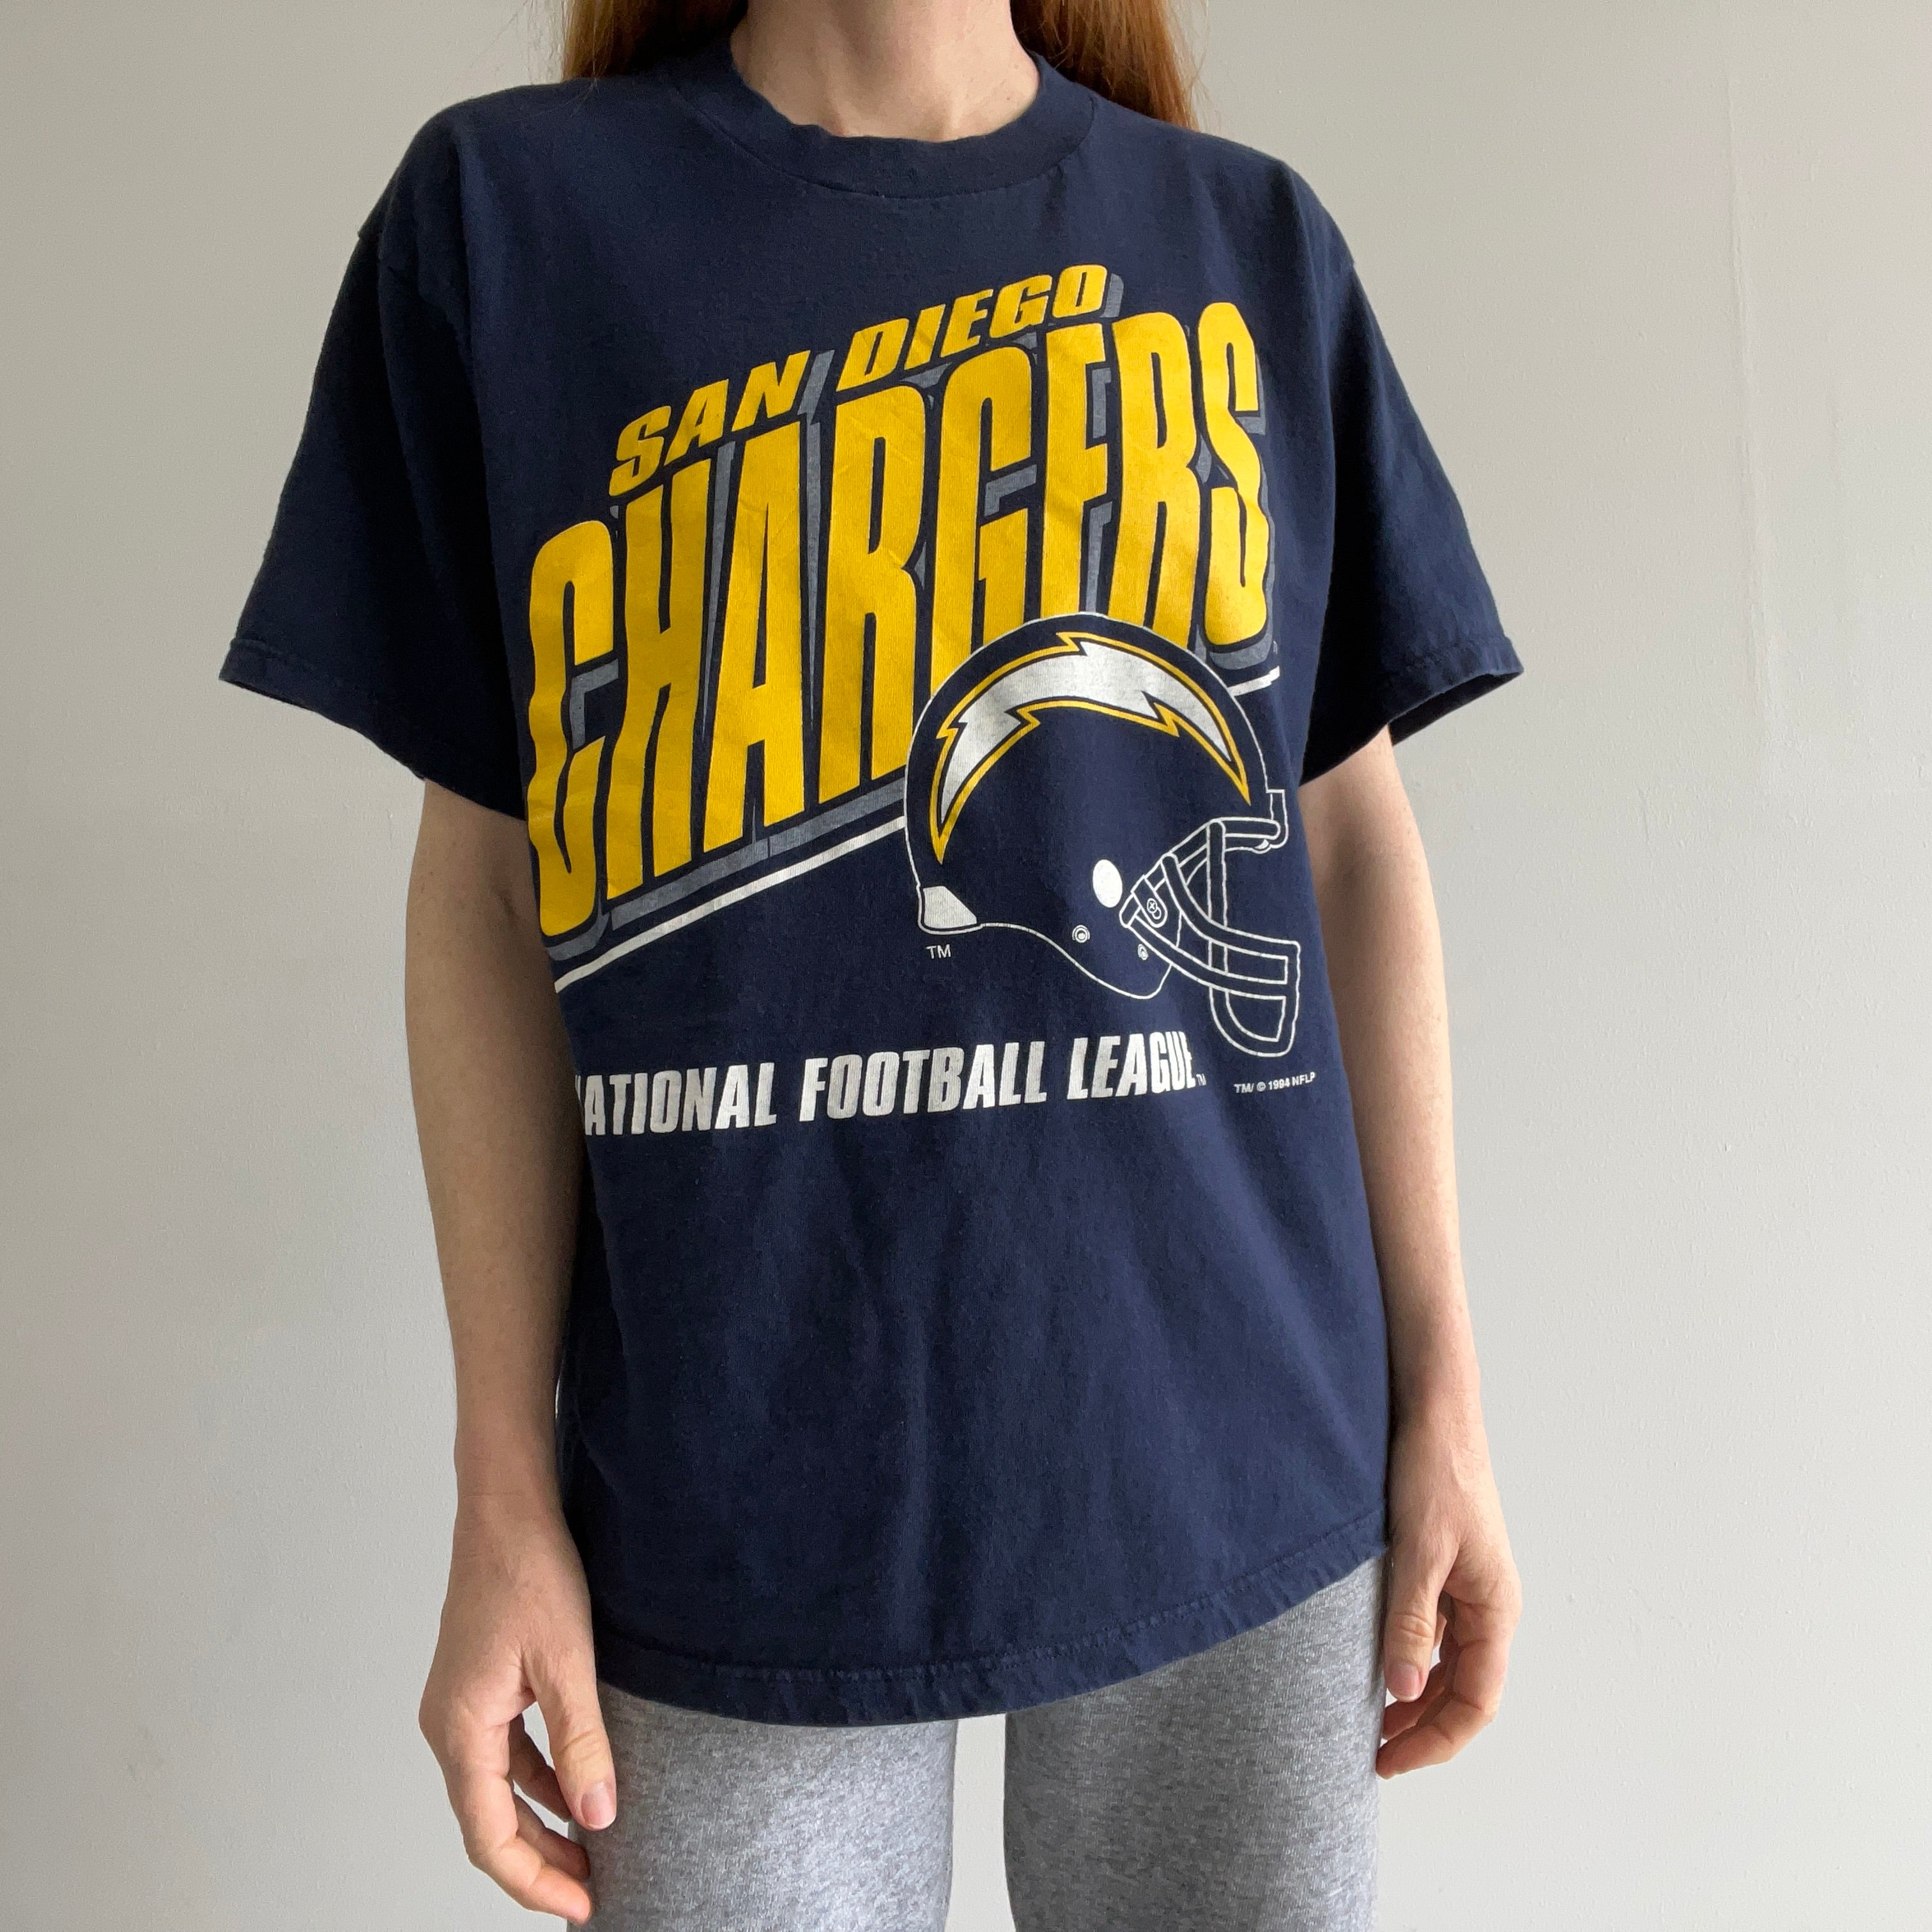 1994 San Diego Chargers NFL T-Shirt (Sorry SD, LA has 'em now